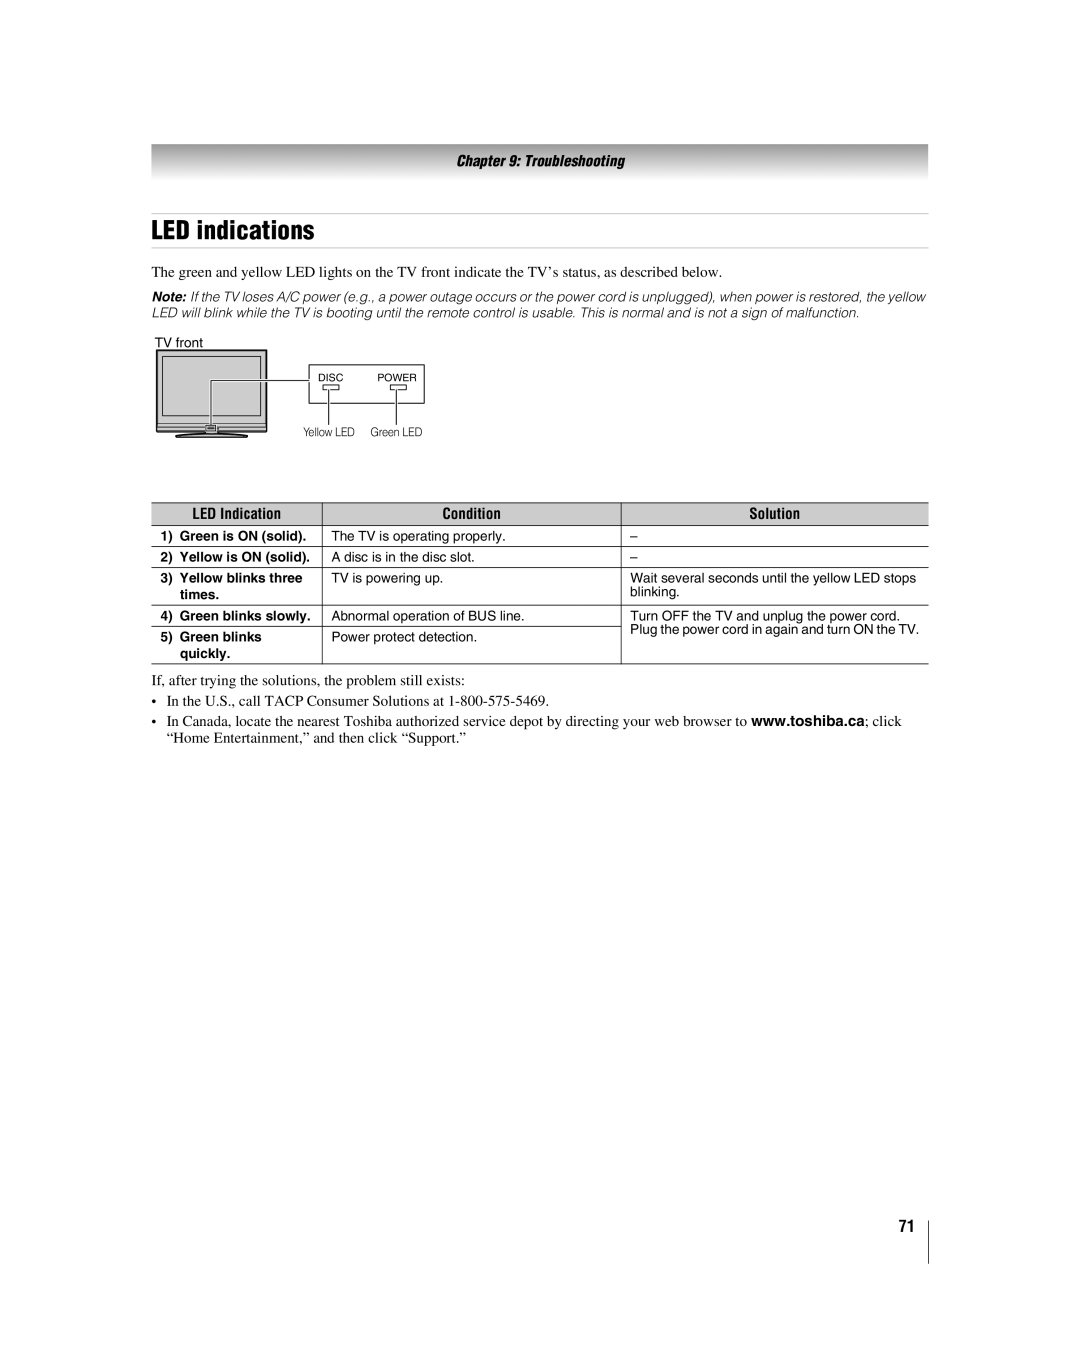 Toshiba 32LV37U, 32LV17U manual LED indications, LED Indication, Condition, Solution, Troubleshooting 